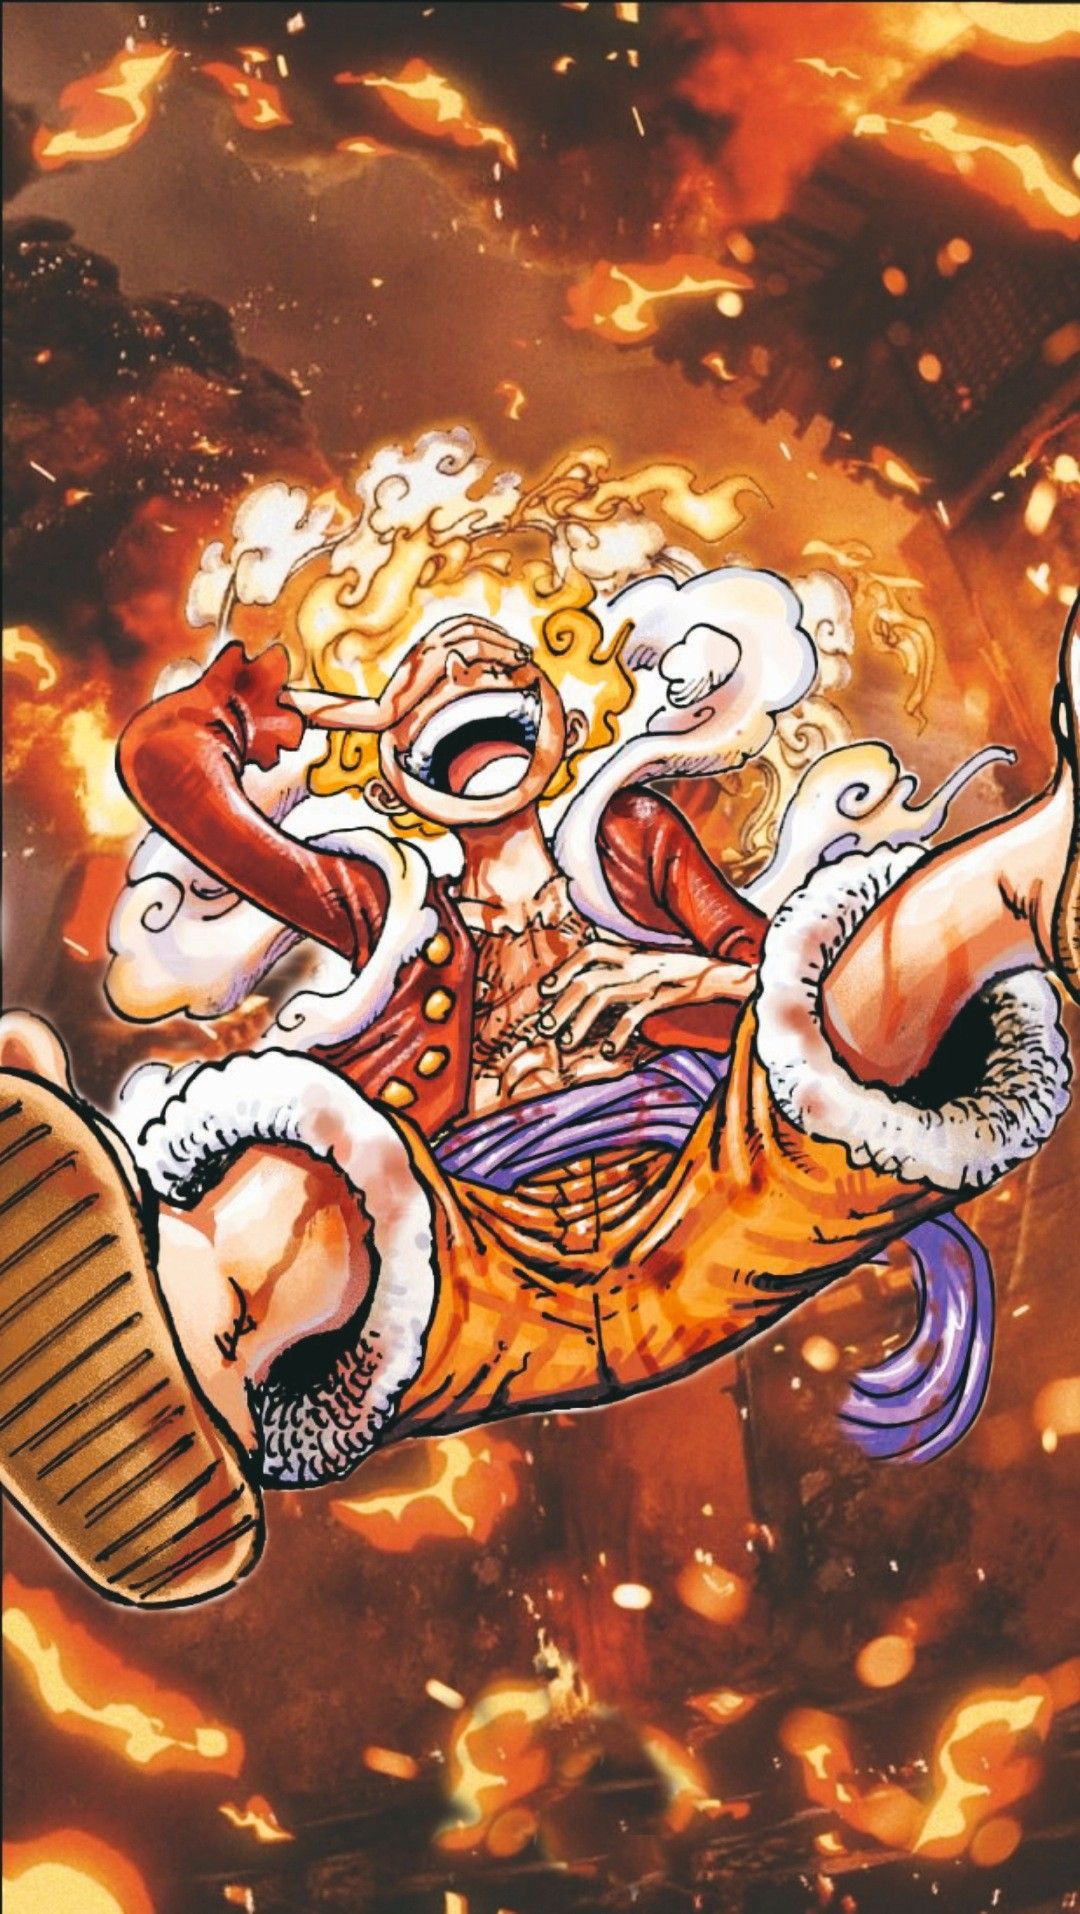 Luffy Gear 5 Sun God Nika Background. One piece wallpaper iphone, Manga anime one piece, Anime